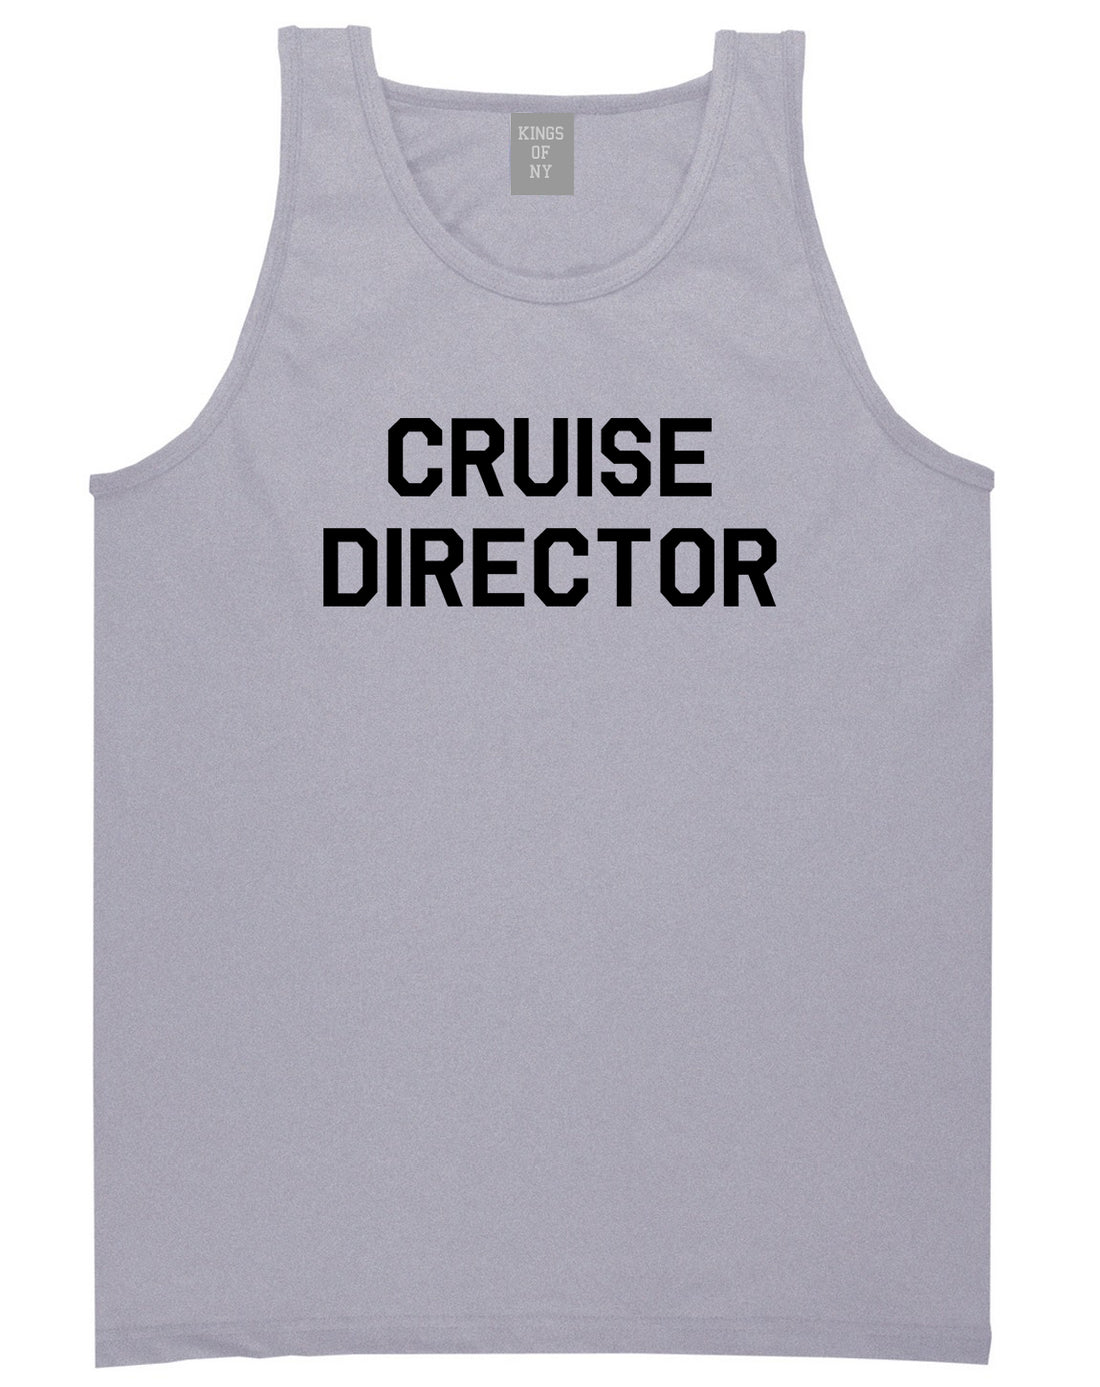 Cruise_Director Mens Grey Tank Top Shirt by Kings Of NY